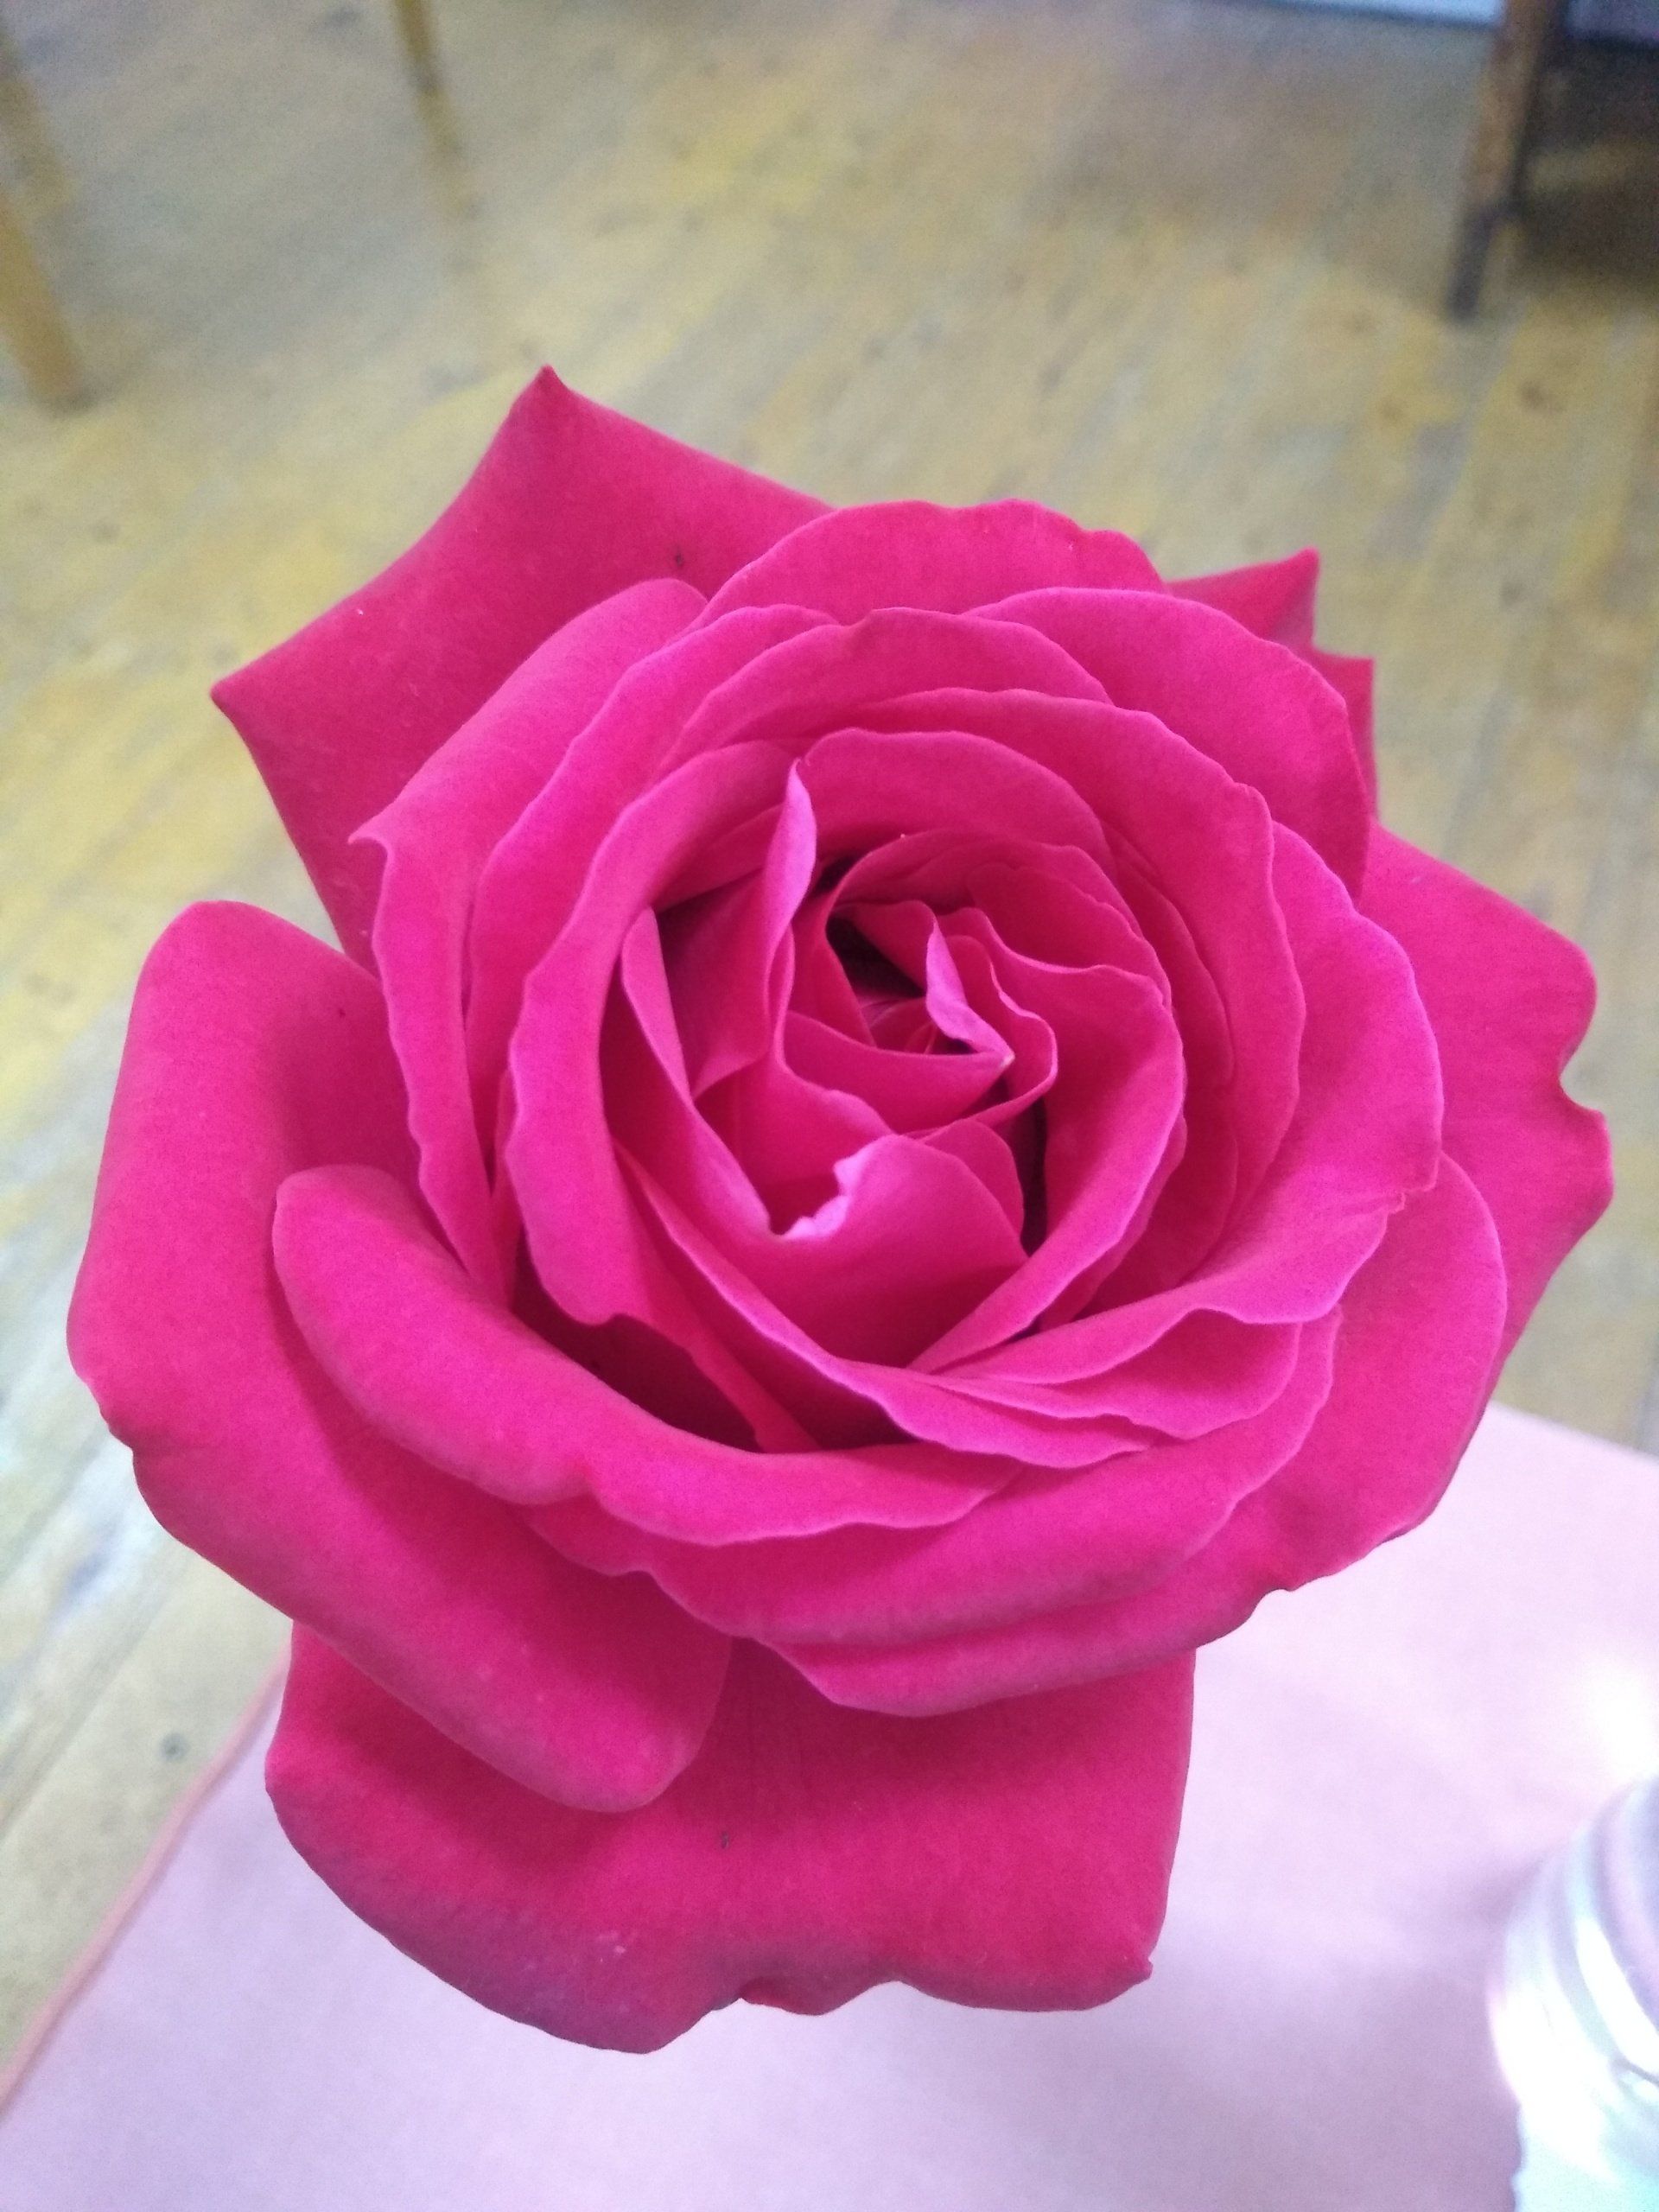 Rose 4 well formed dark pink